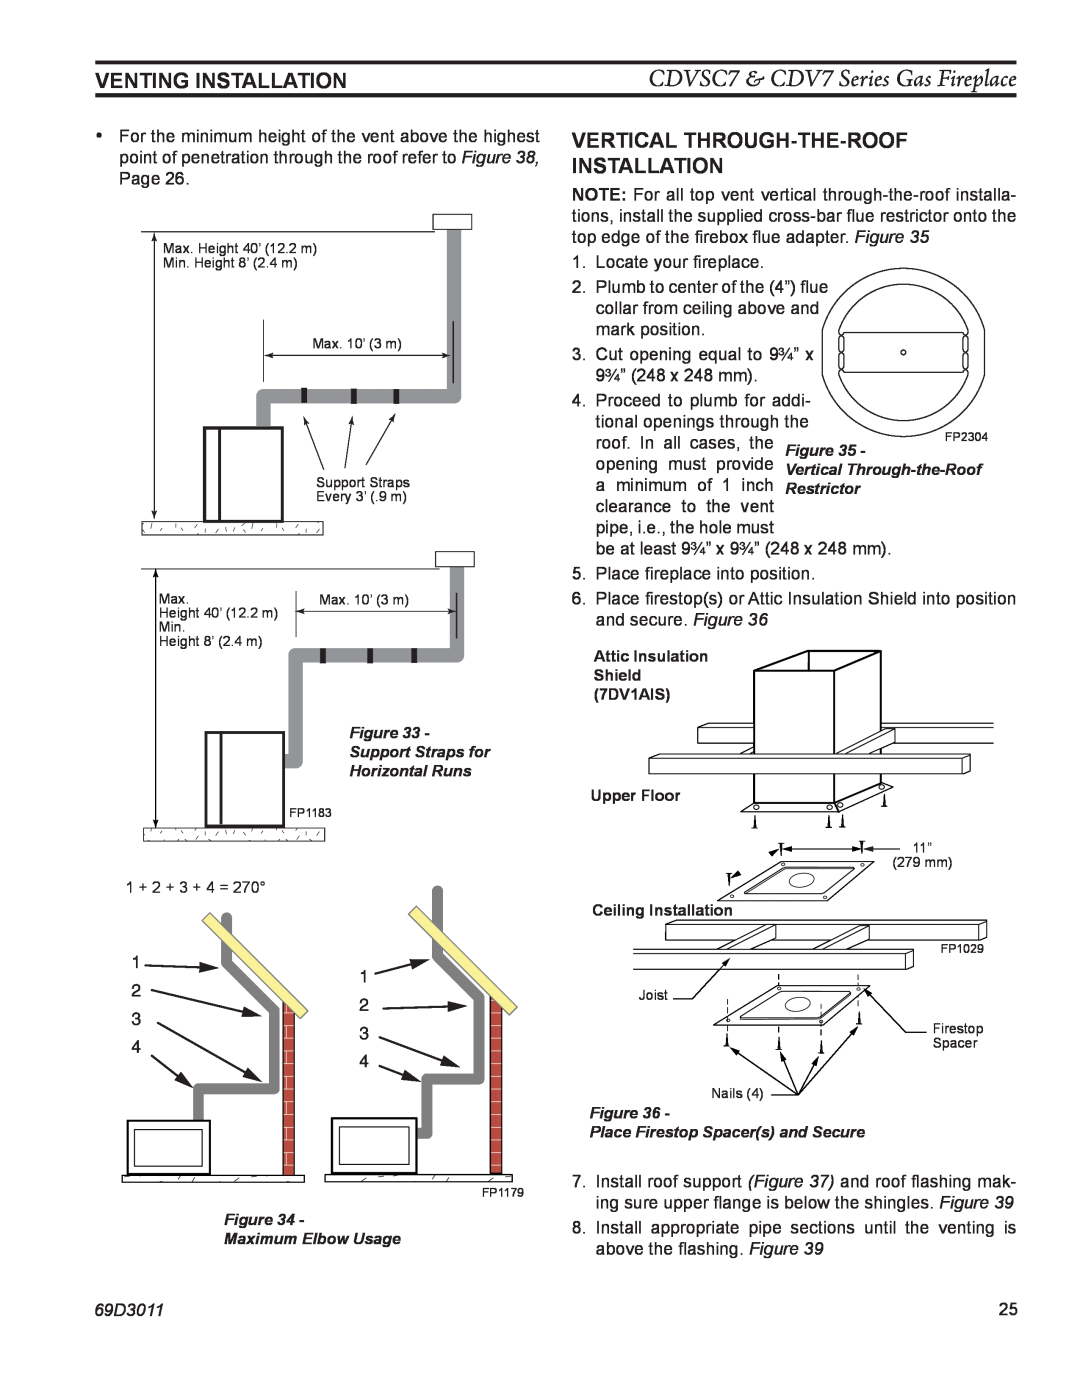 Monessen Hearth manual Vertical Through-The-Roofinstallation, CDVSC7 & CDV7 Series Gas Fireplace, Venting installation 